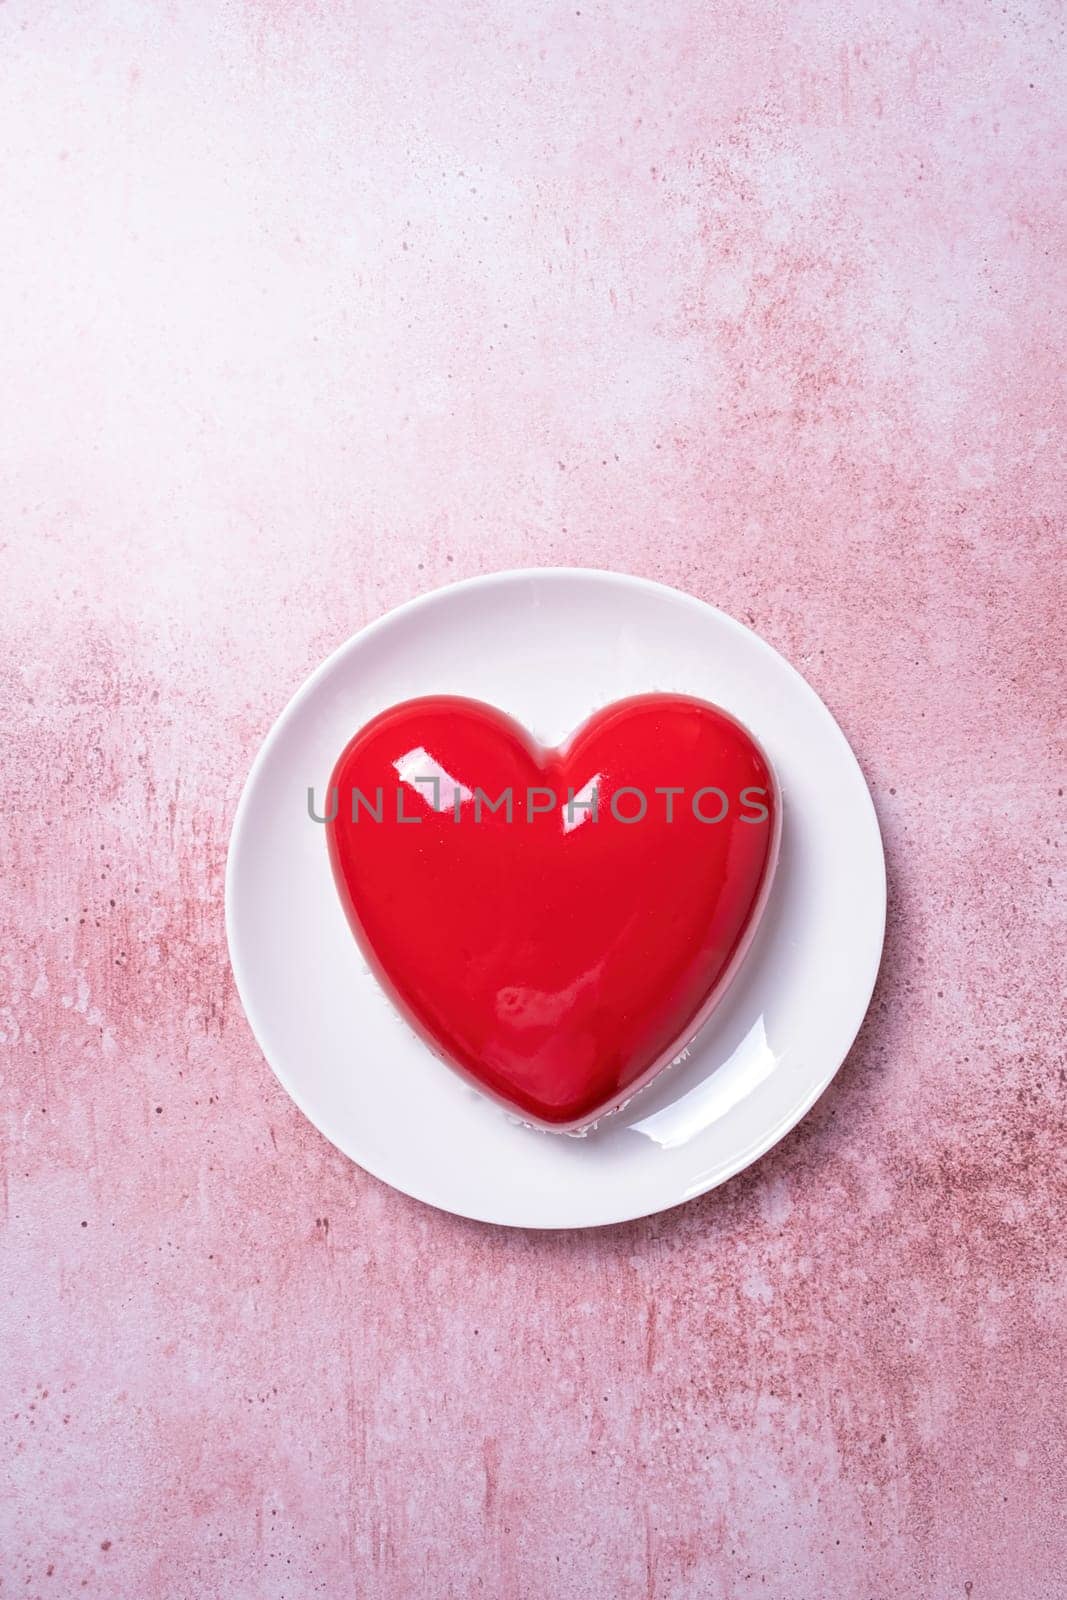 heart shaped glazed valentine cake on white plate on pink concrete background by Desperada